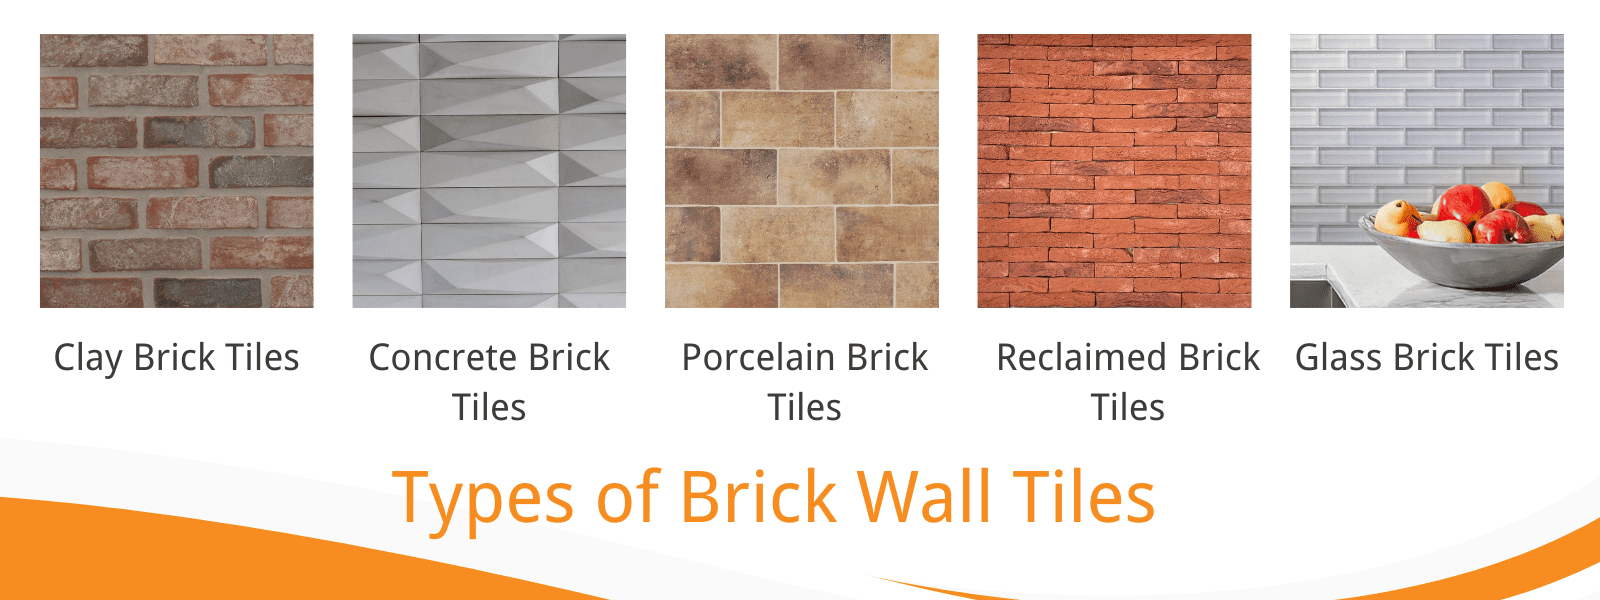 Types of Brick Wall Tiles